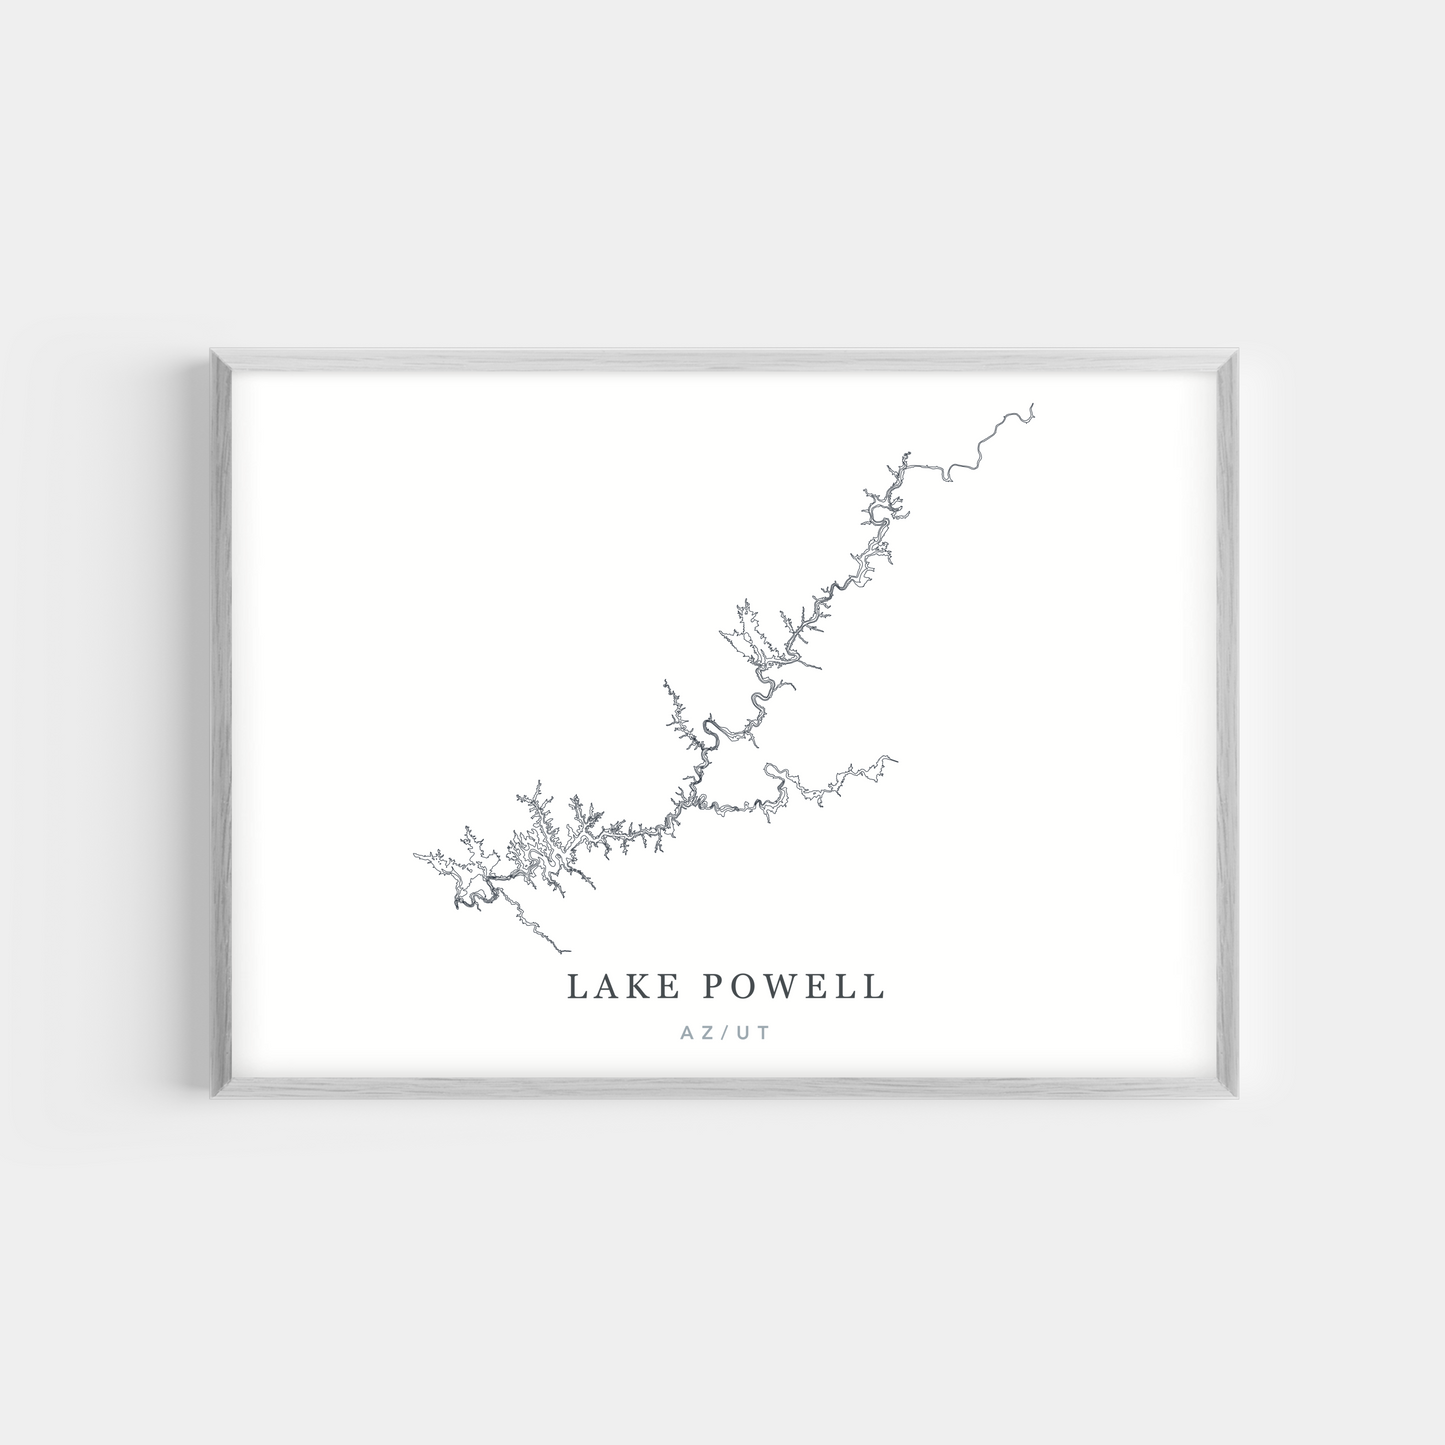 Lake Powell, AZ/UT | Photo Print